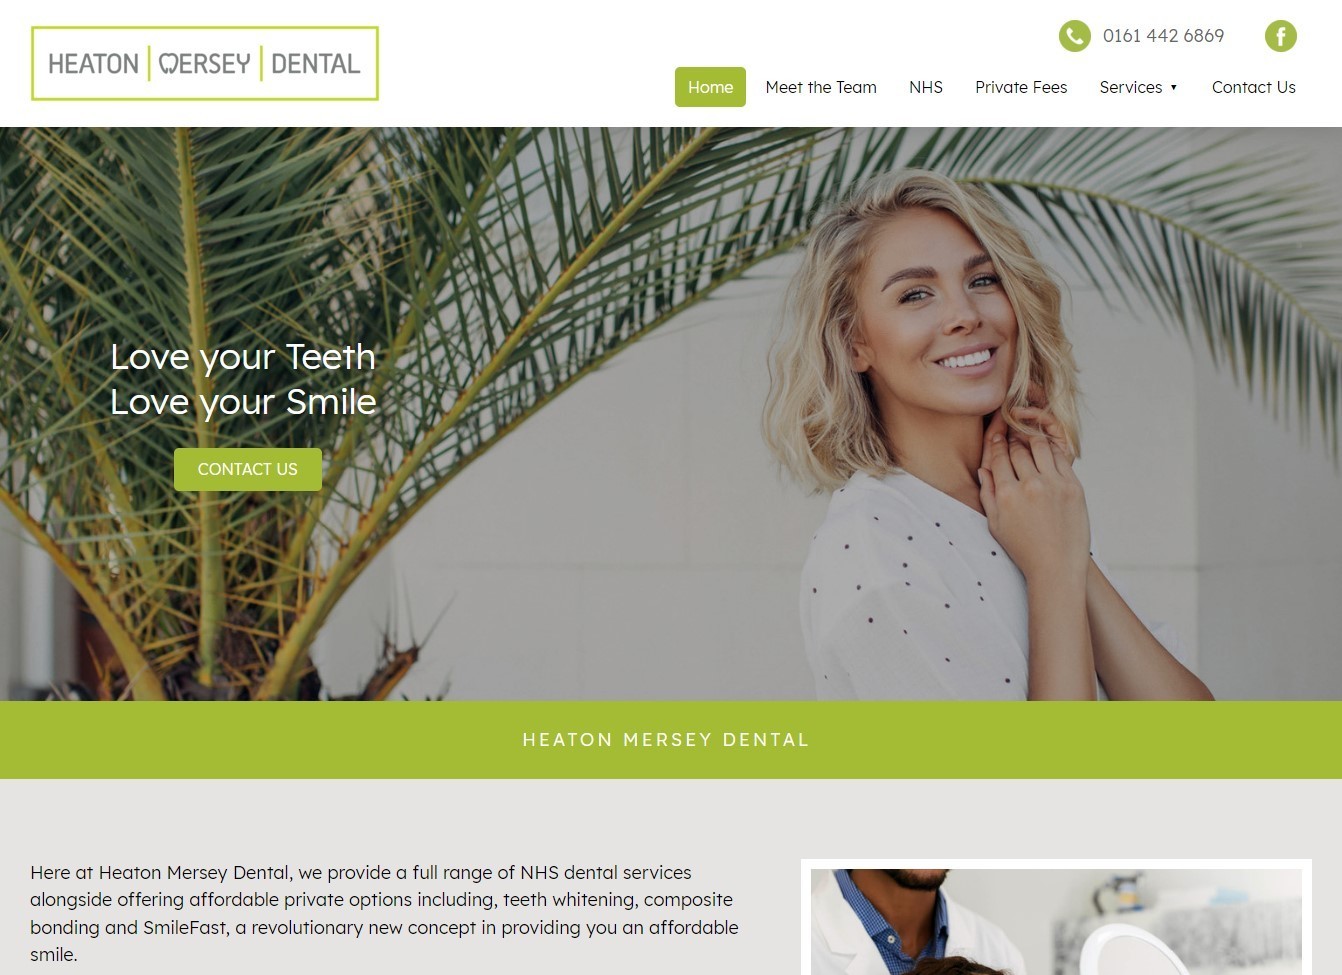 Heaton Mersey Dental website design